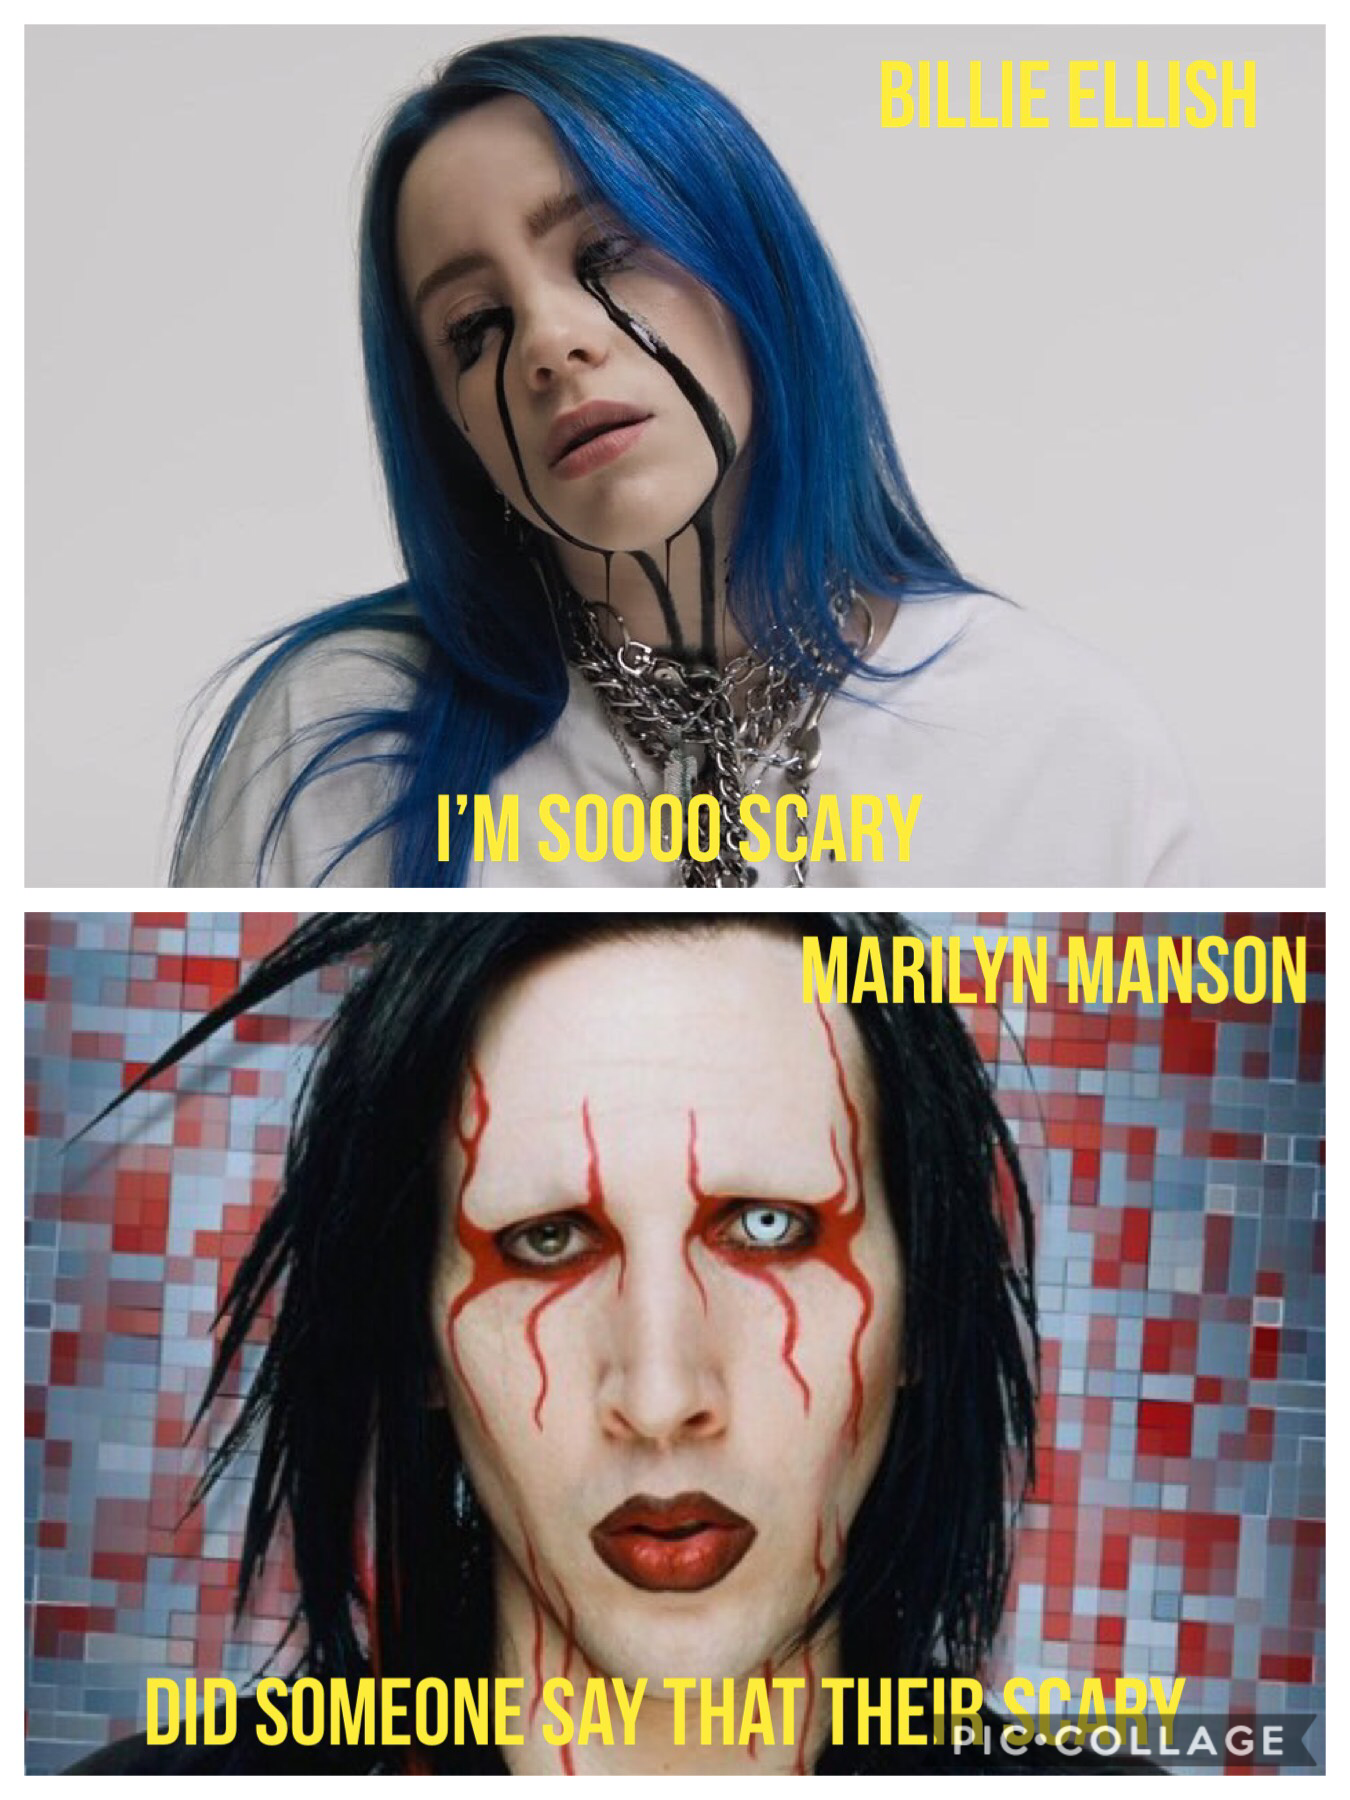 Marilyn Manson vs Billie ellish